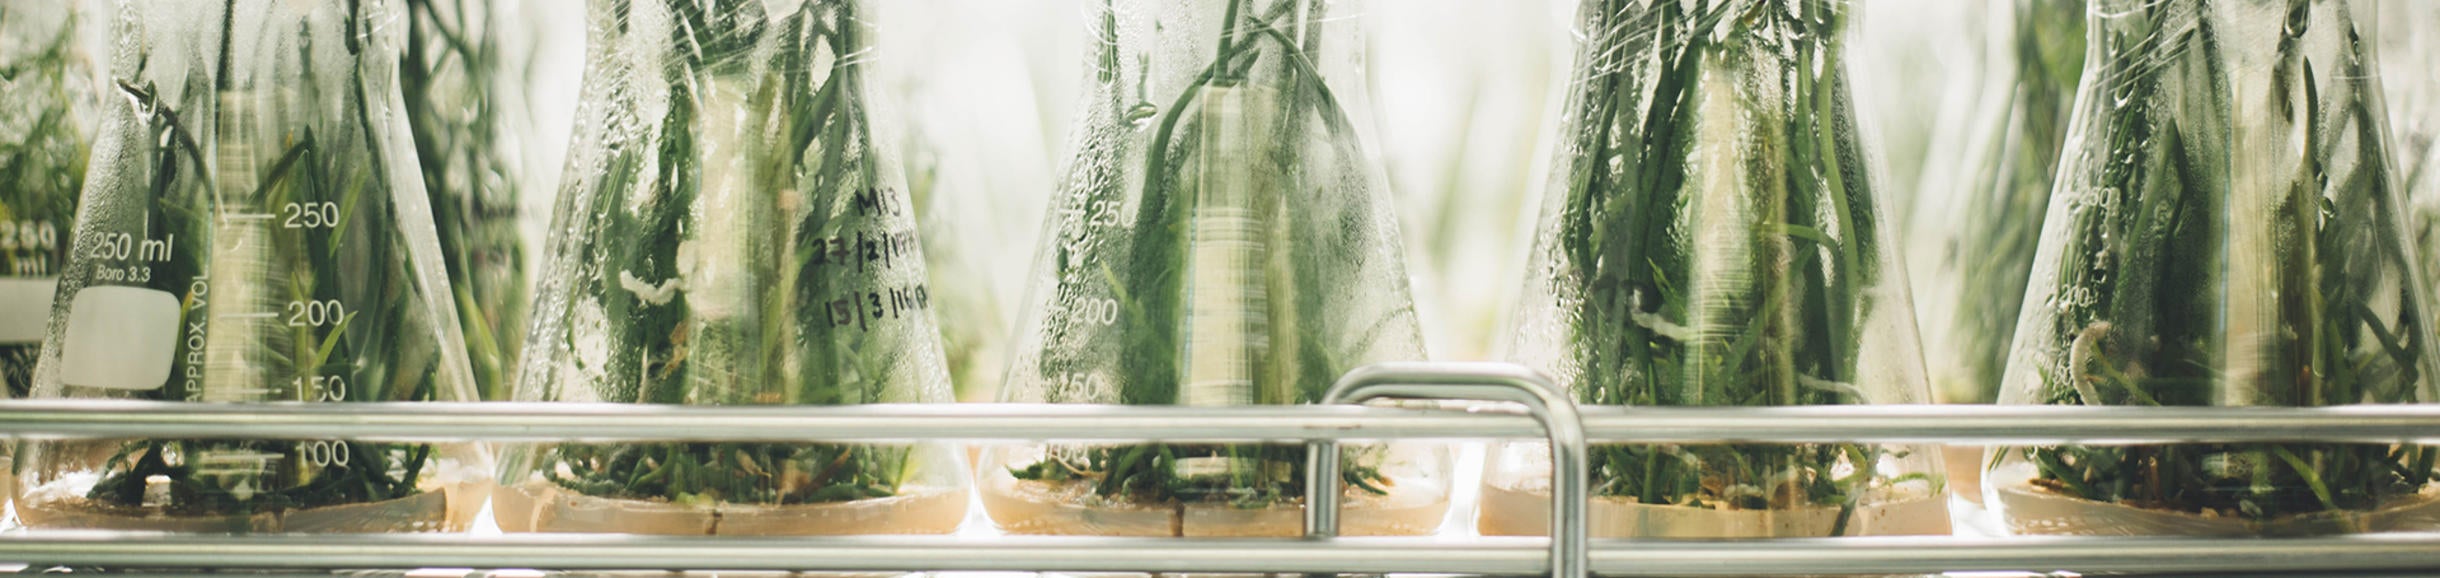 Glass beakers with plants inside on a shelf (c) Chuttersnap unsplash